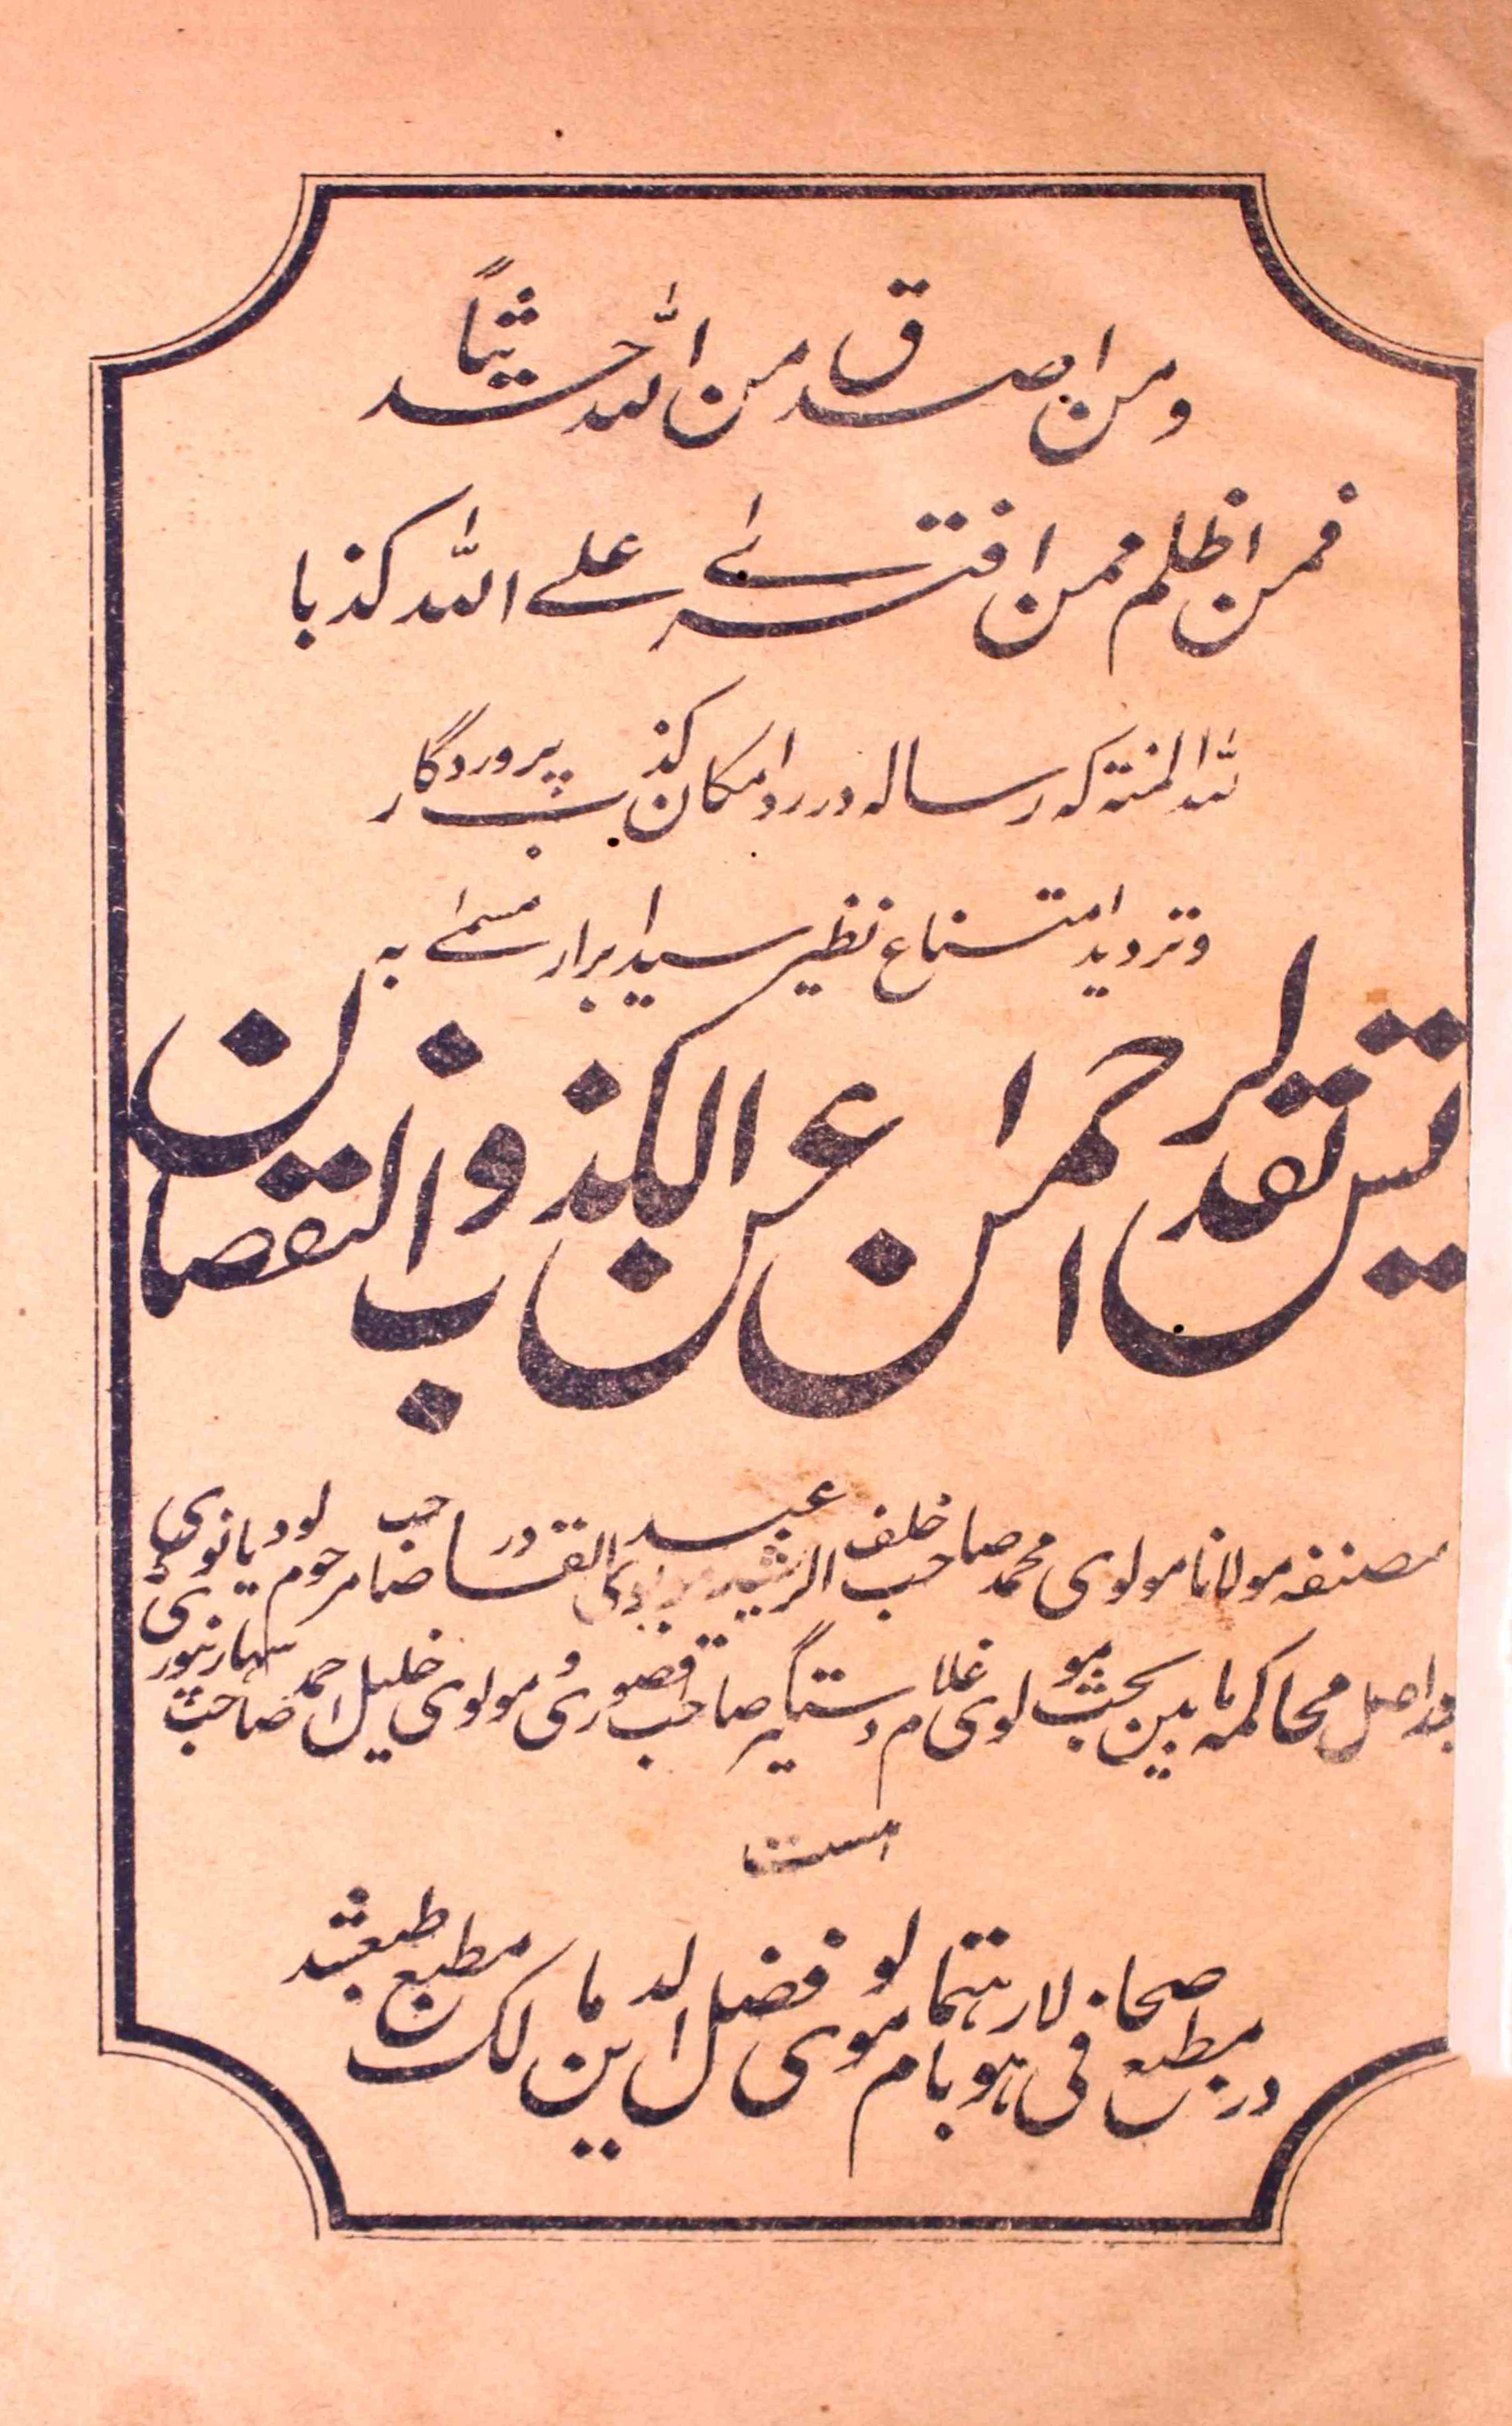 Taqdees-ur-Rahman Anil Kizb-e-Wannuqsan